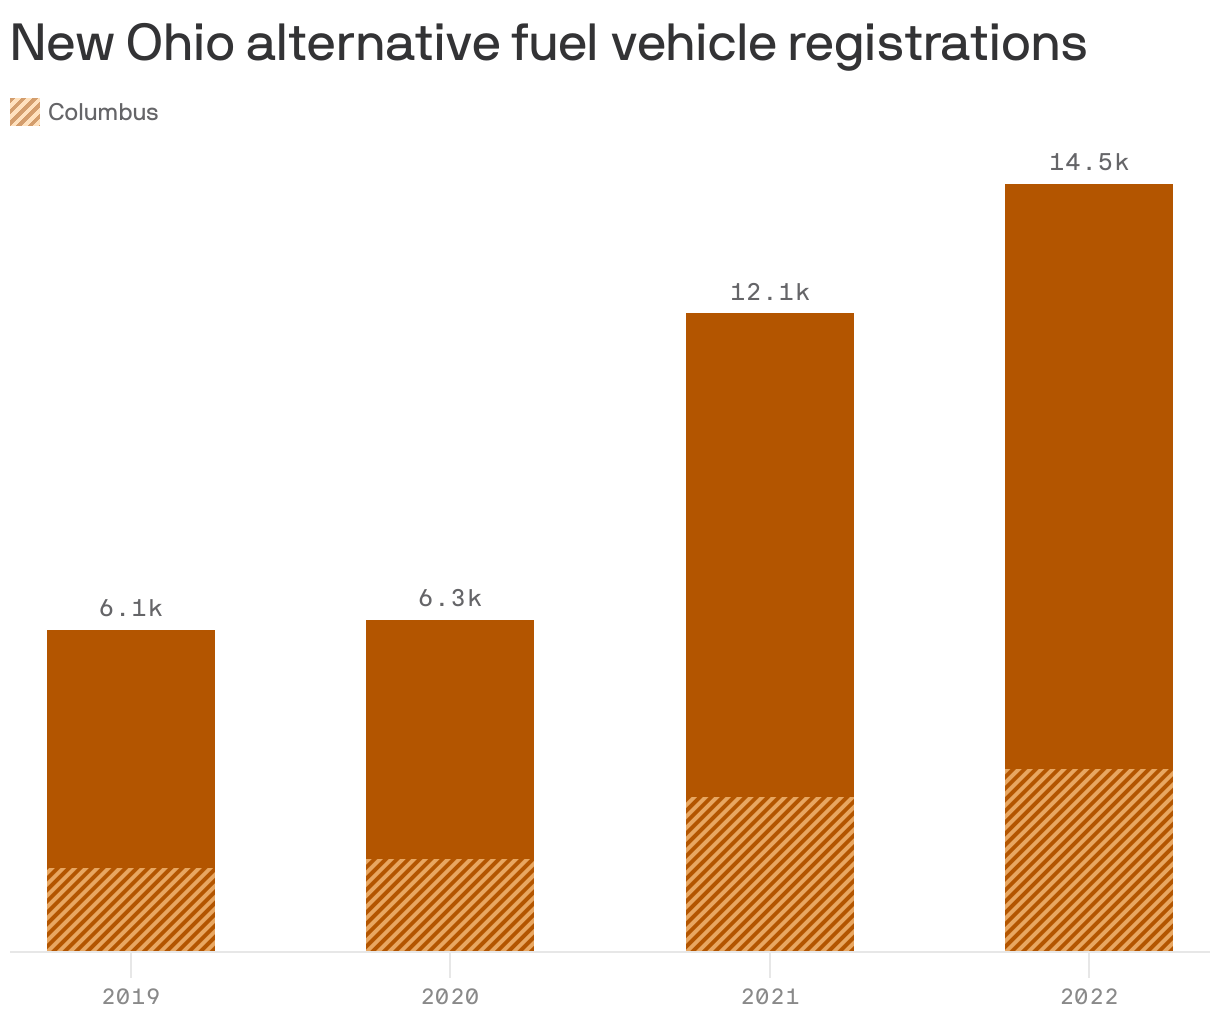 New Ohio alternative fuel vehicle registrations